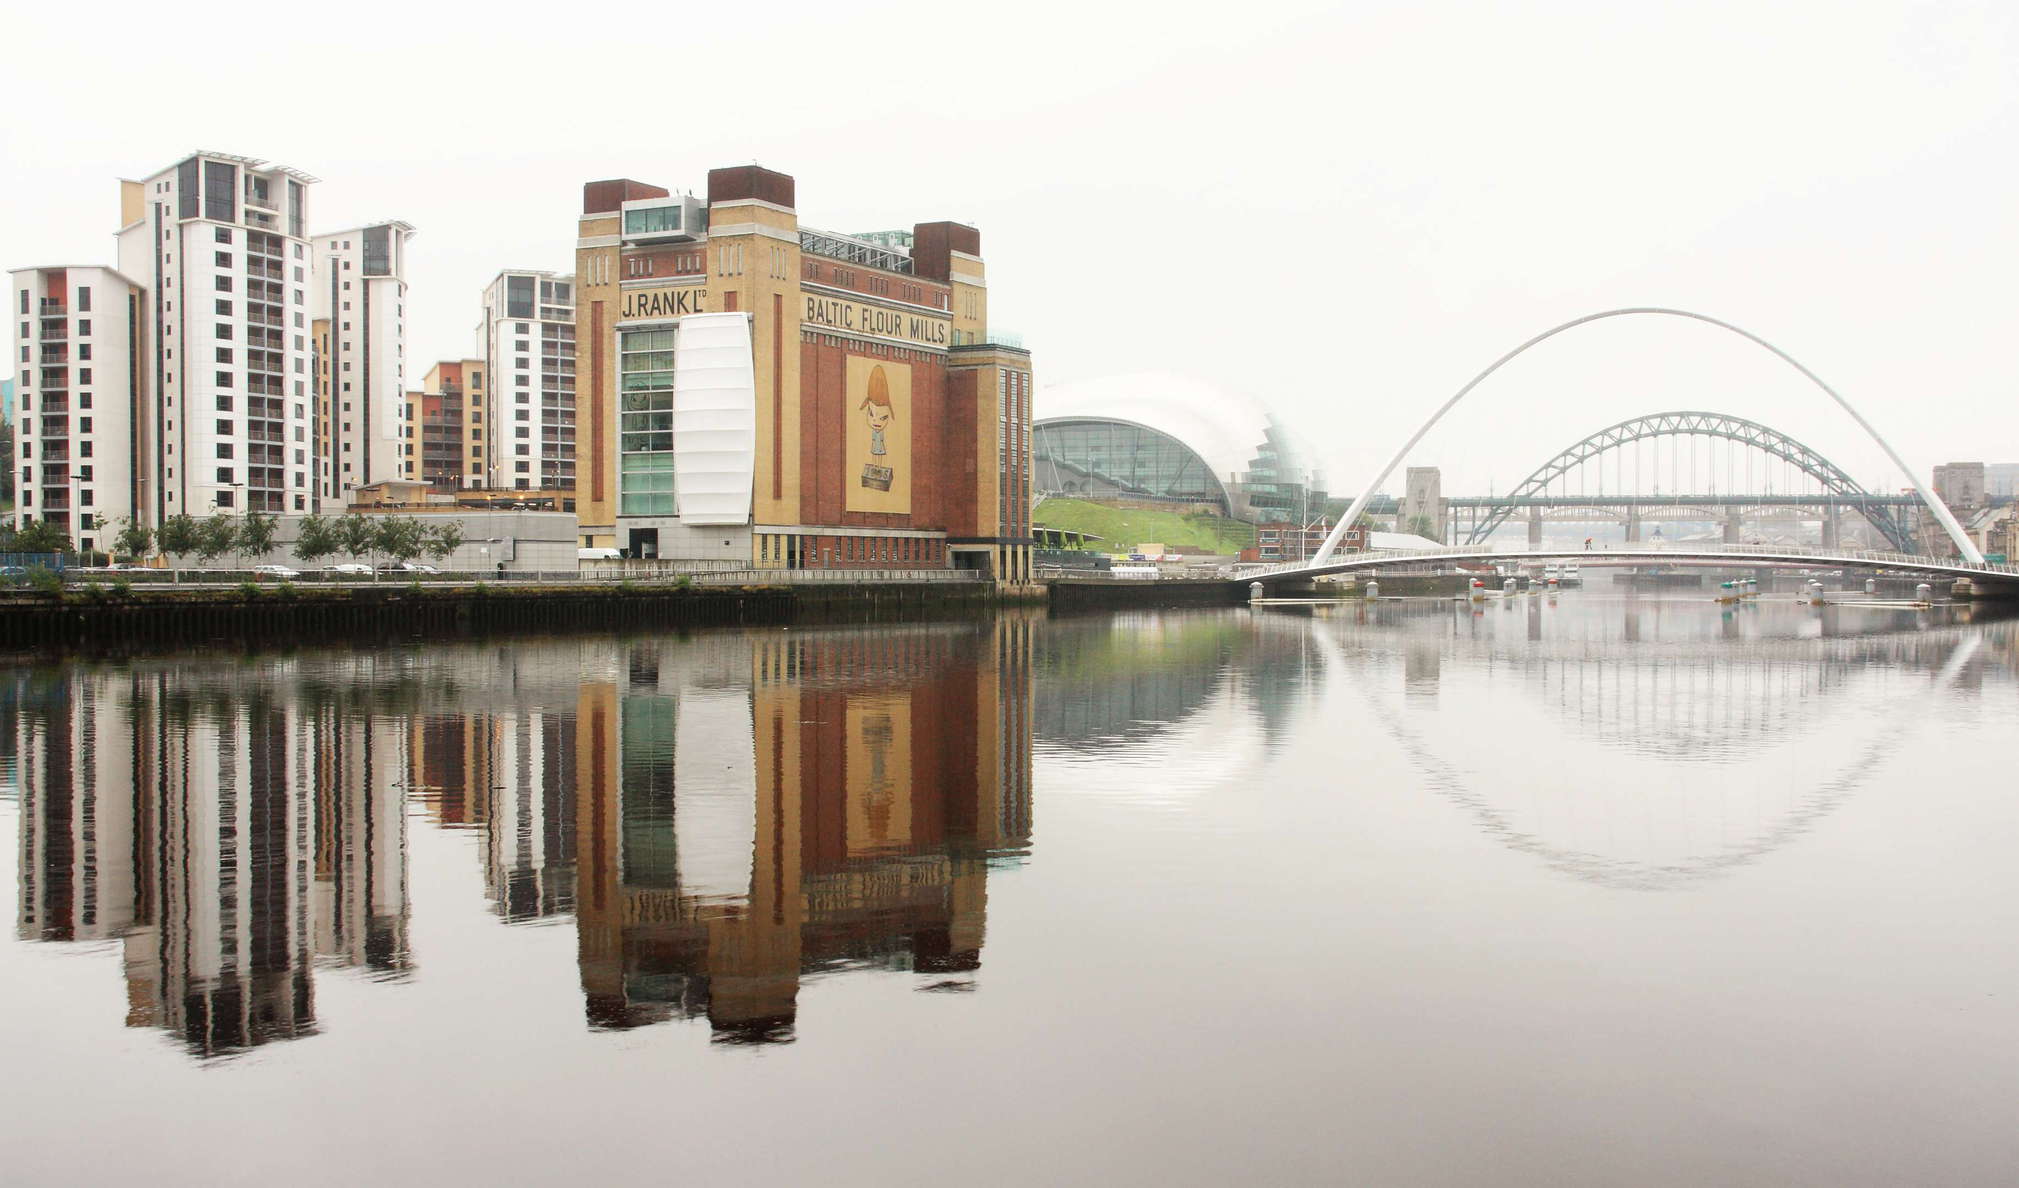 Gateshead  |  River Tyne with Quayside